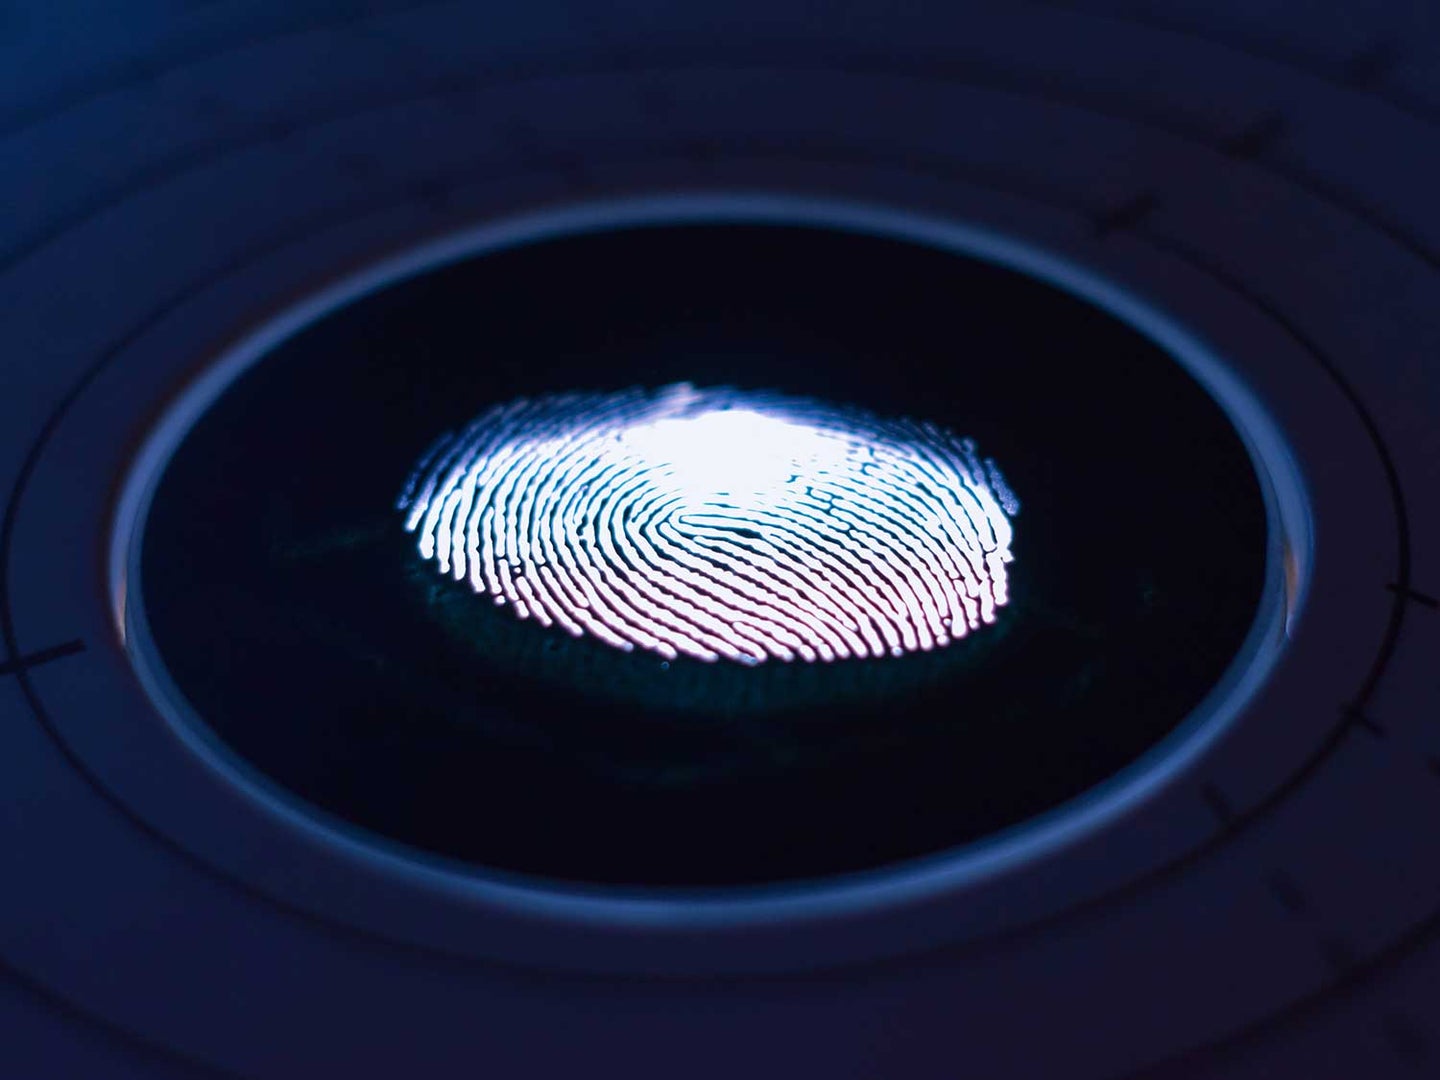 biometric safes